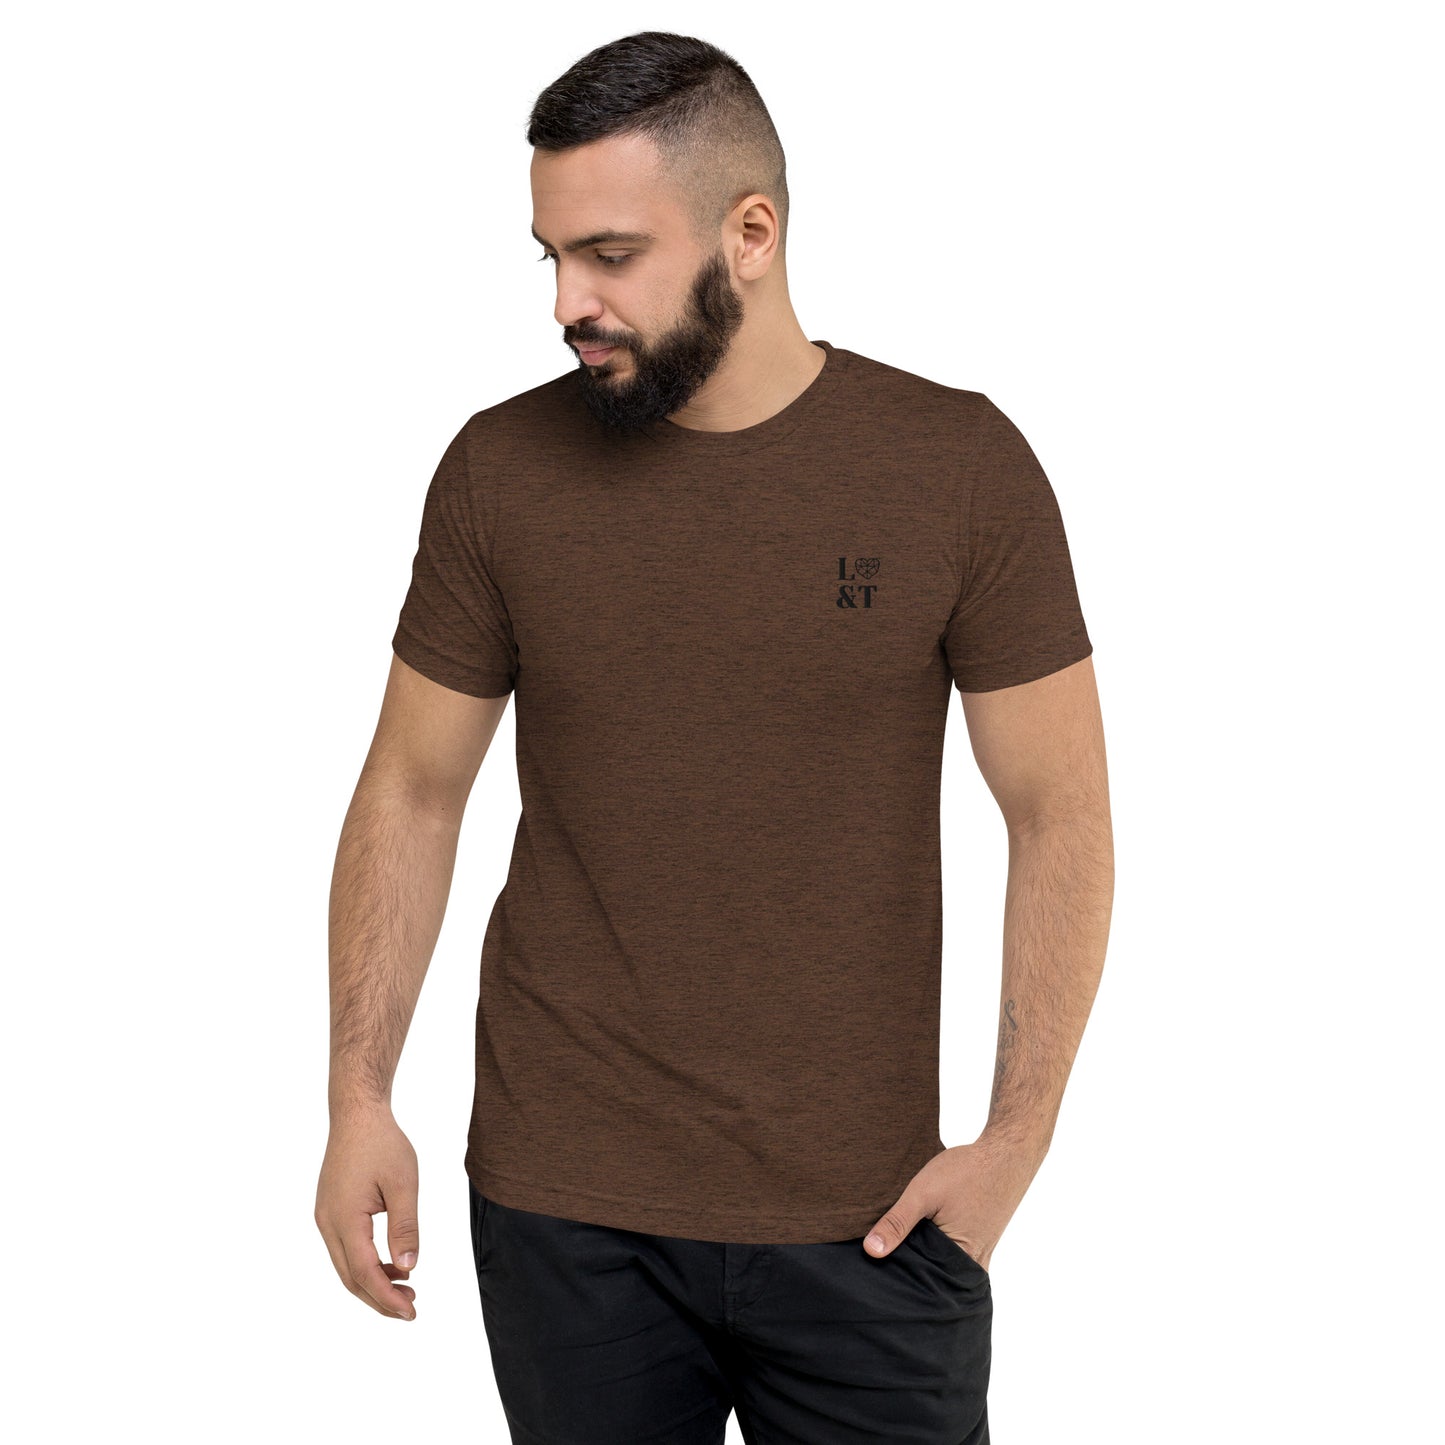 L&T Short Sleeve Tri-Blend Embroidered Logo T-Shirt